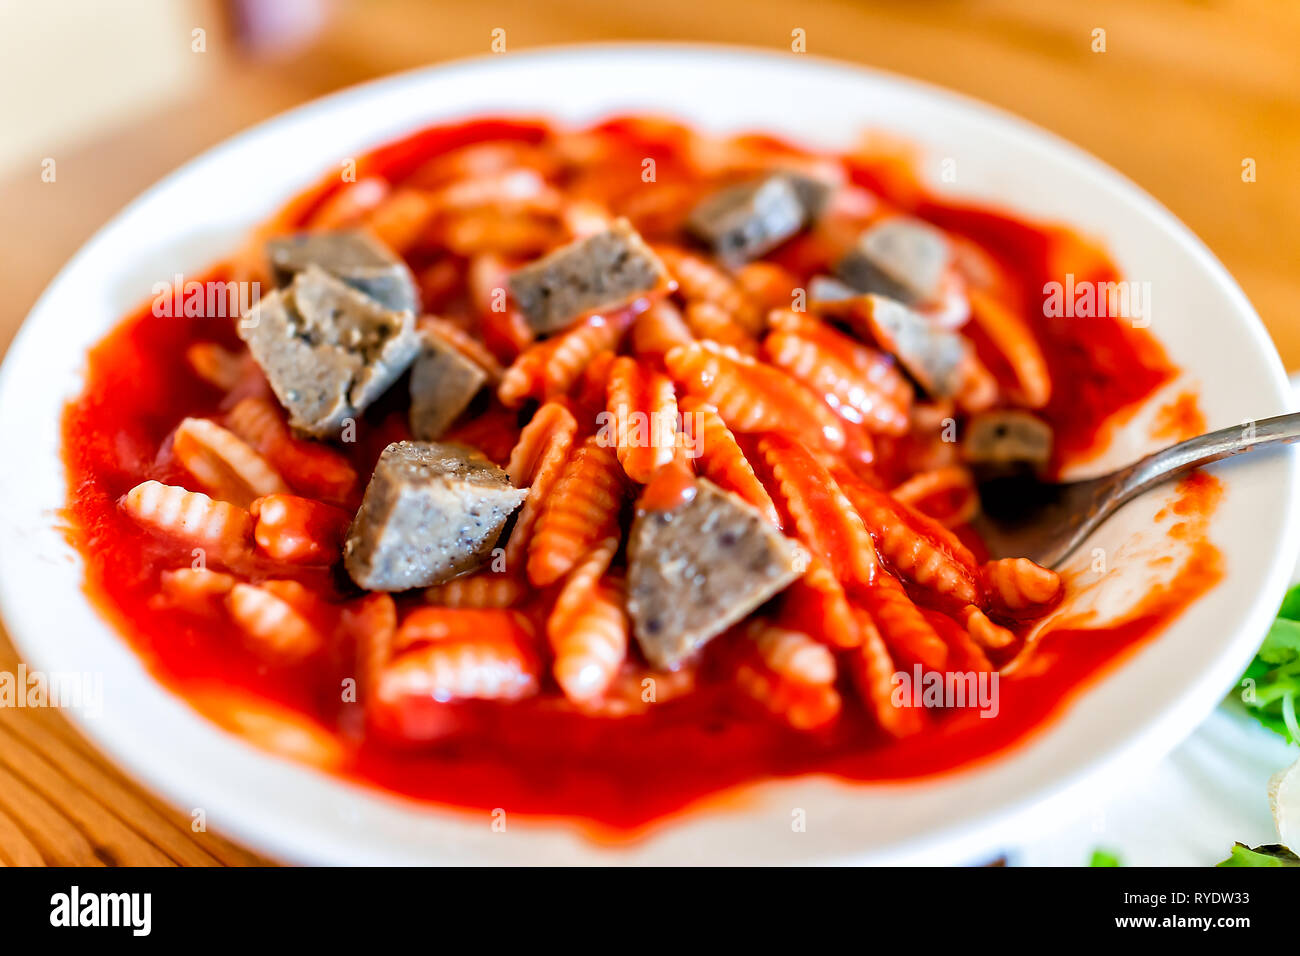 Closeup of bowl with sausage pieces and pasta gnocchi sardi Sardinian shape with red tomato marinara sauce with fork or spoon Stock Photo